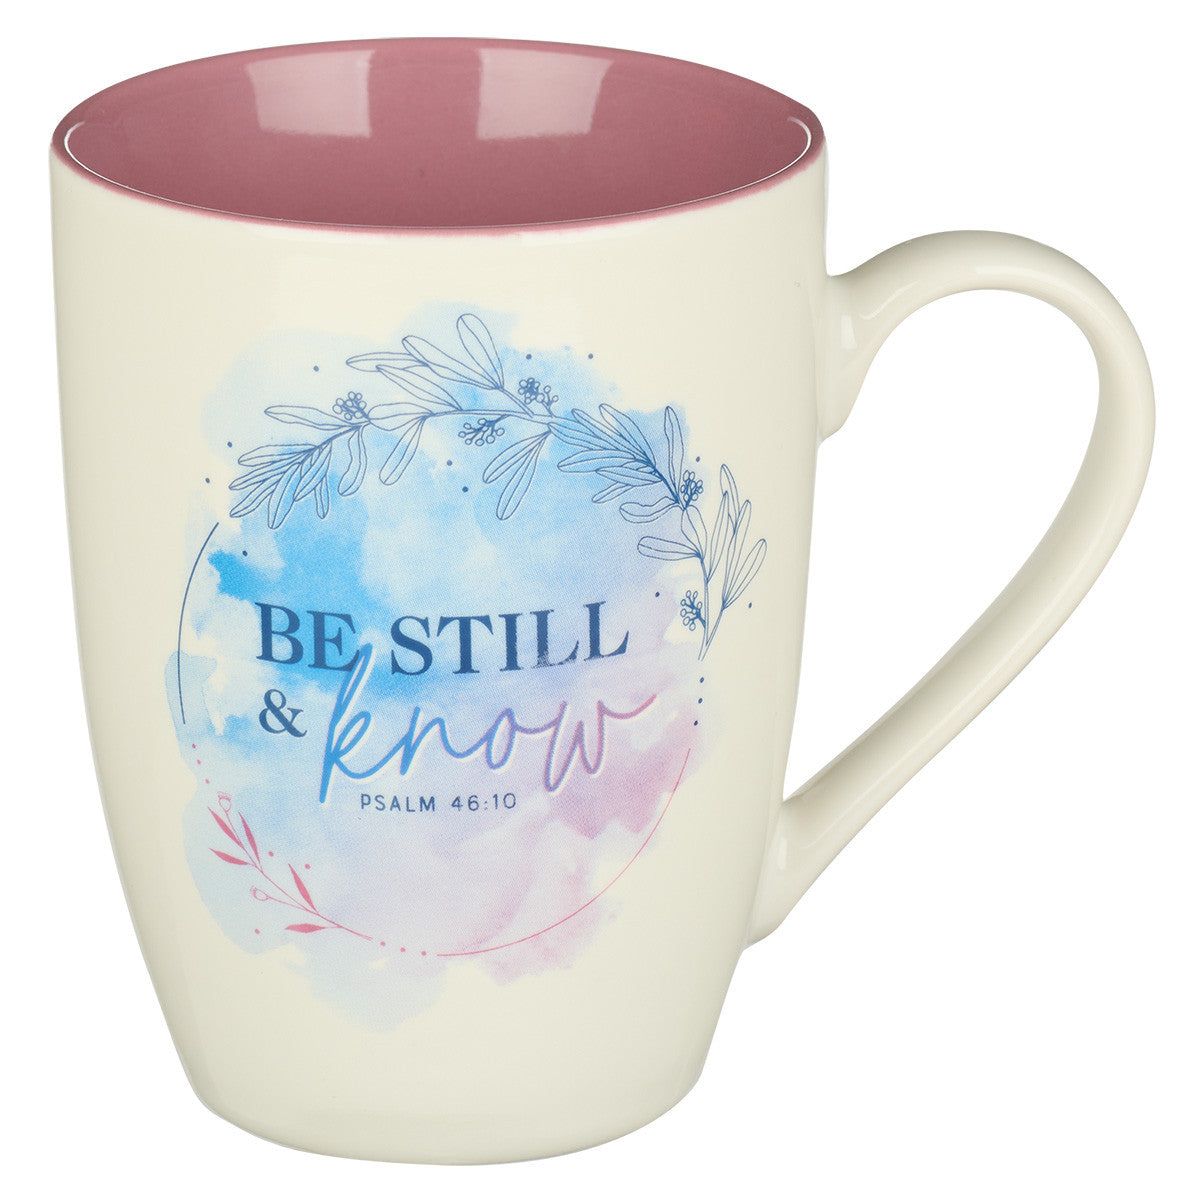 Be Still Mauve Watercolour Ceramic Coffee Mug - Psalm 46:10